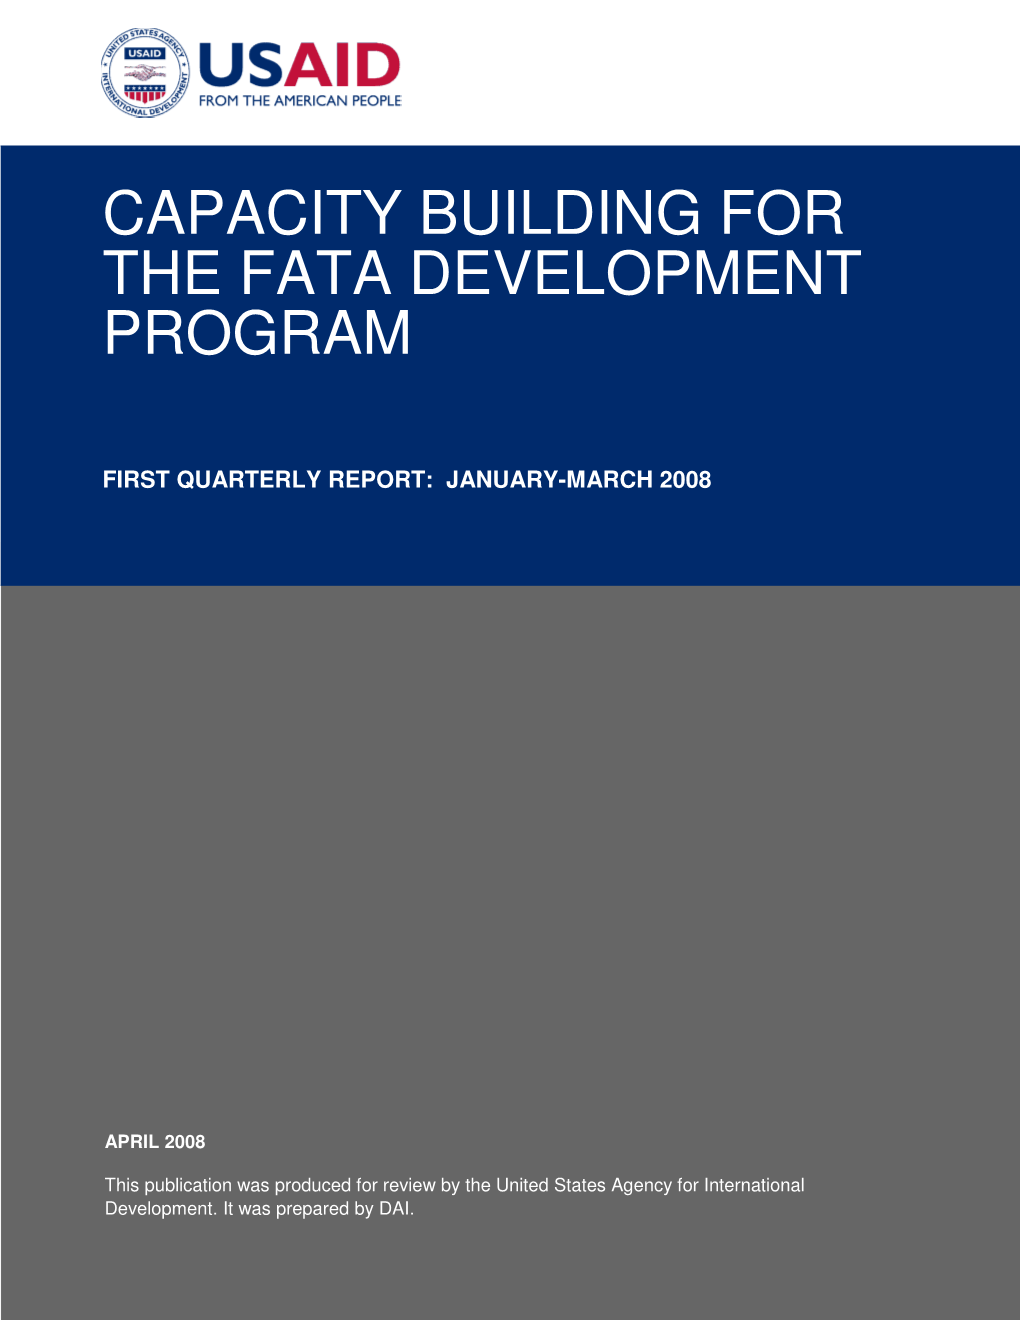 Capacity Building for the Fata Development Program